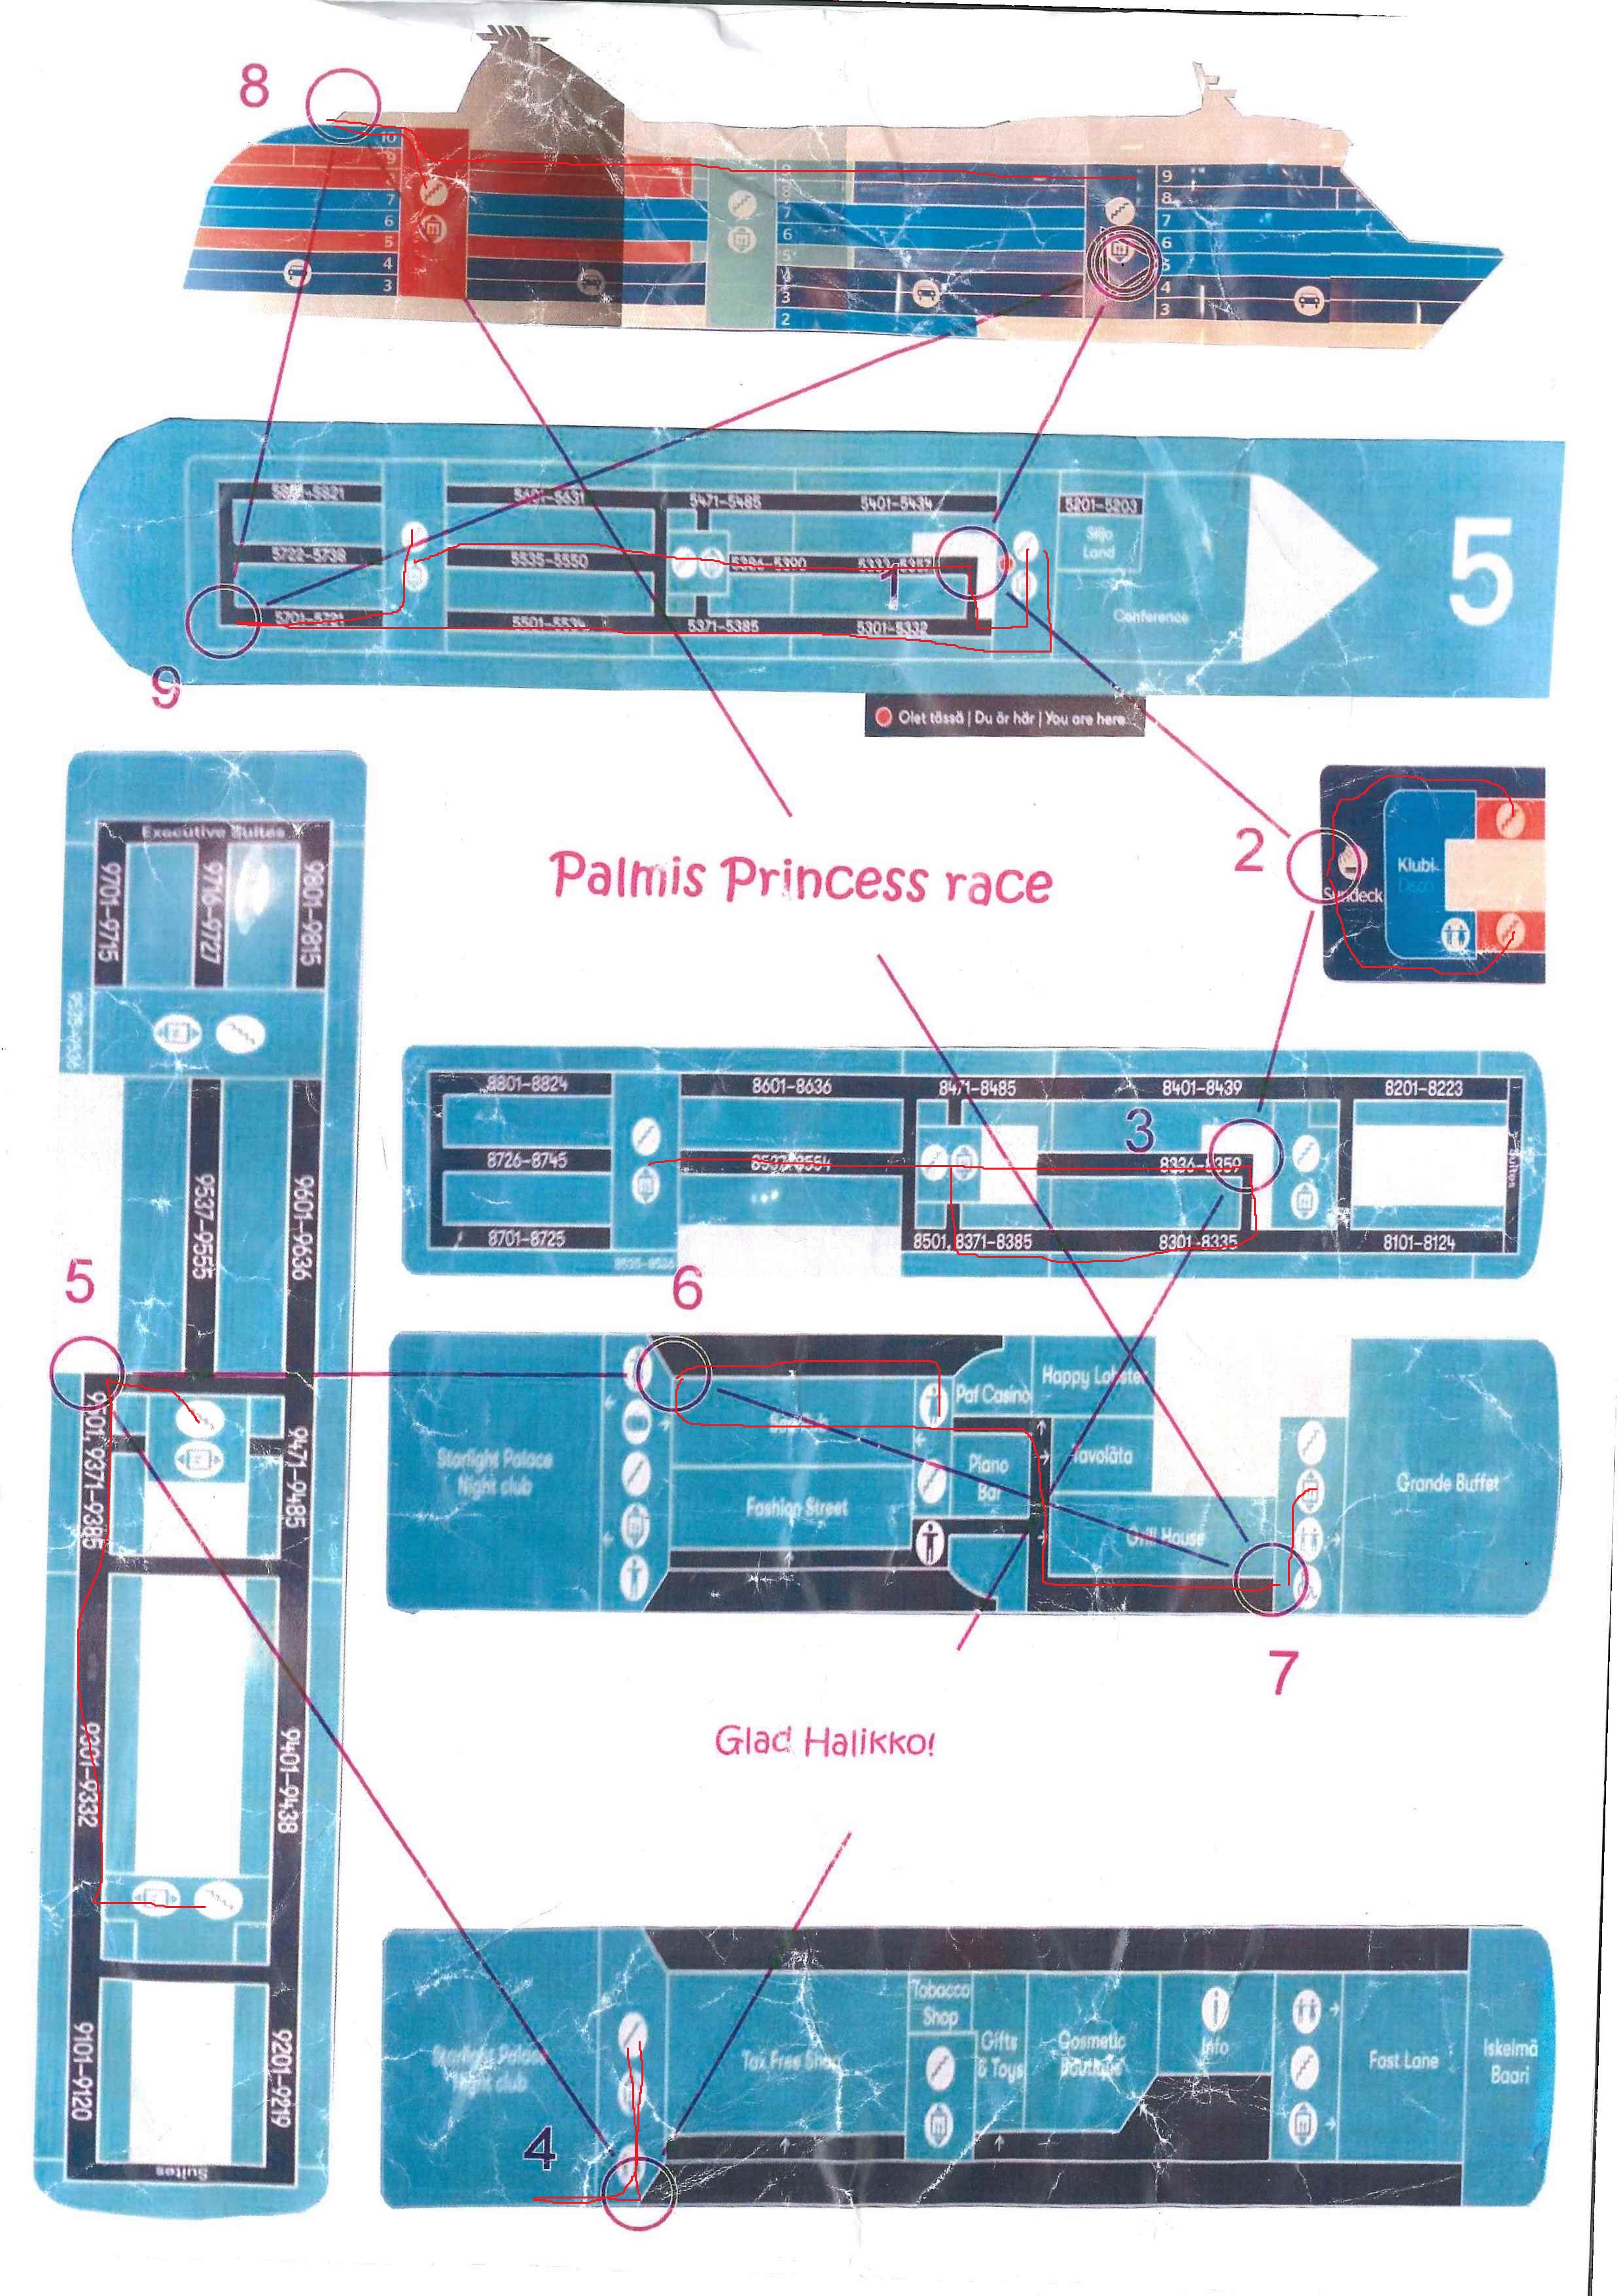 Palmis Princess race by Pasta20 (13-10-2018)